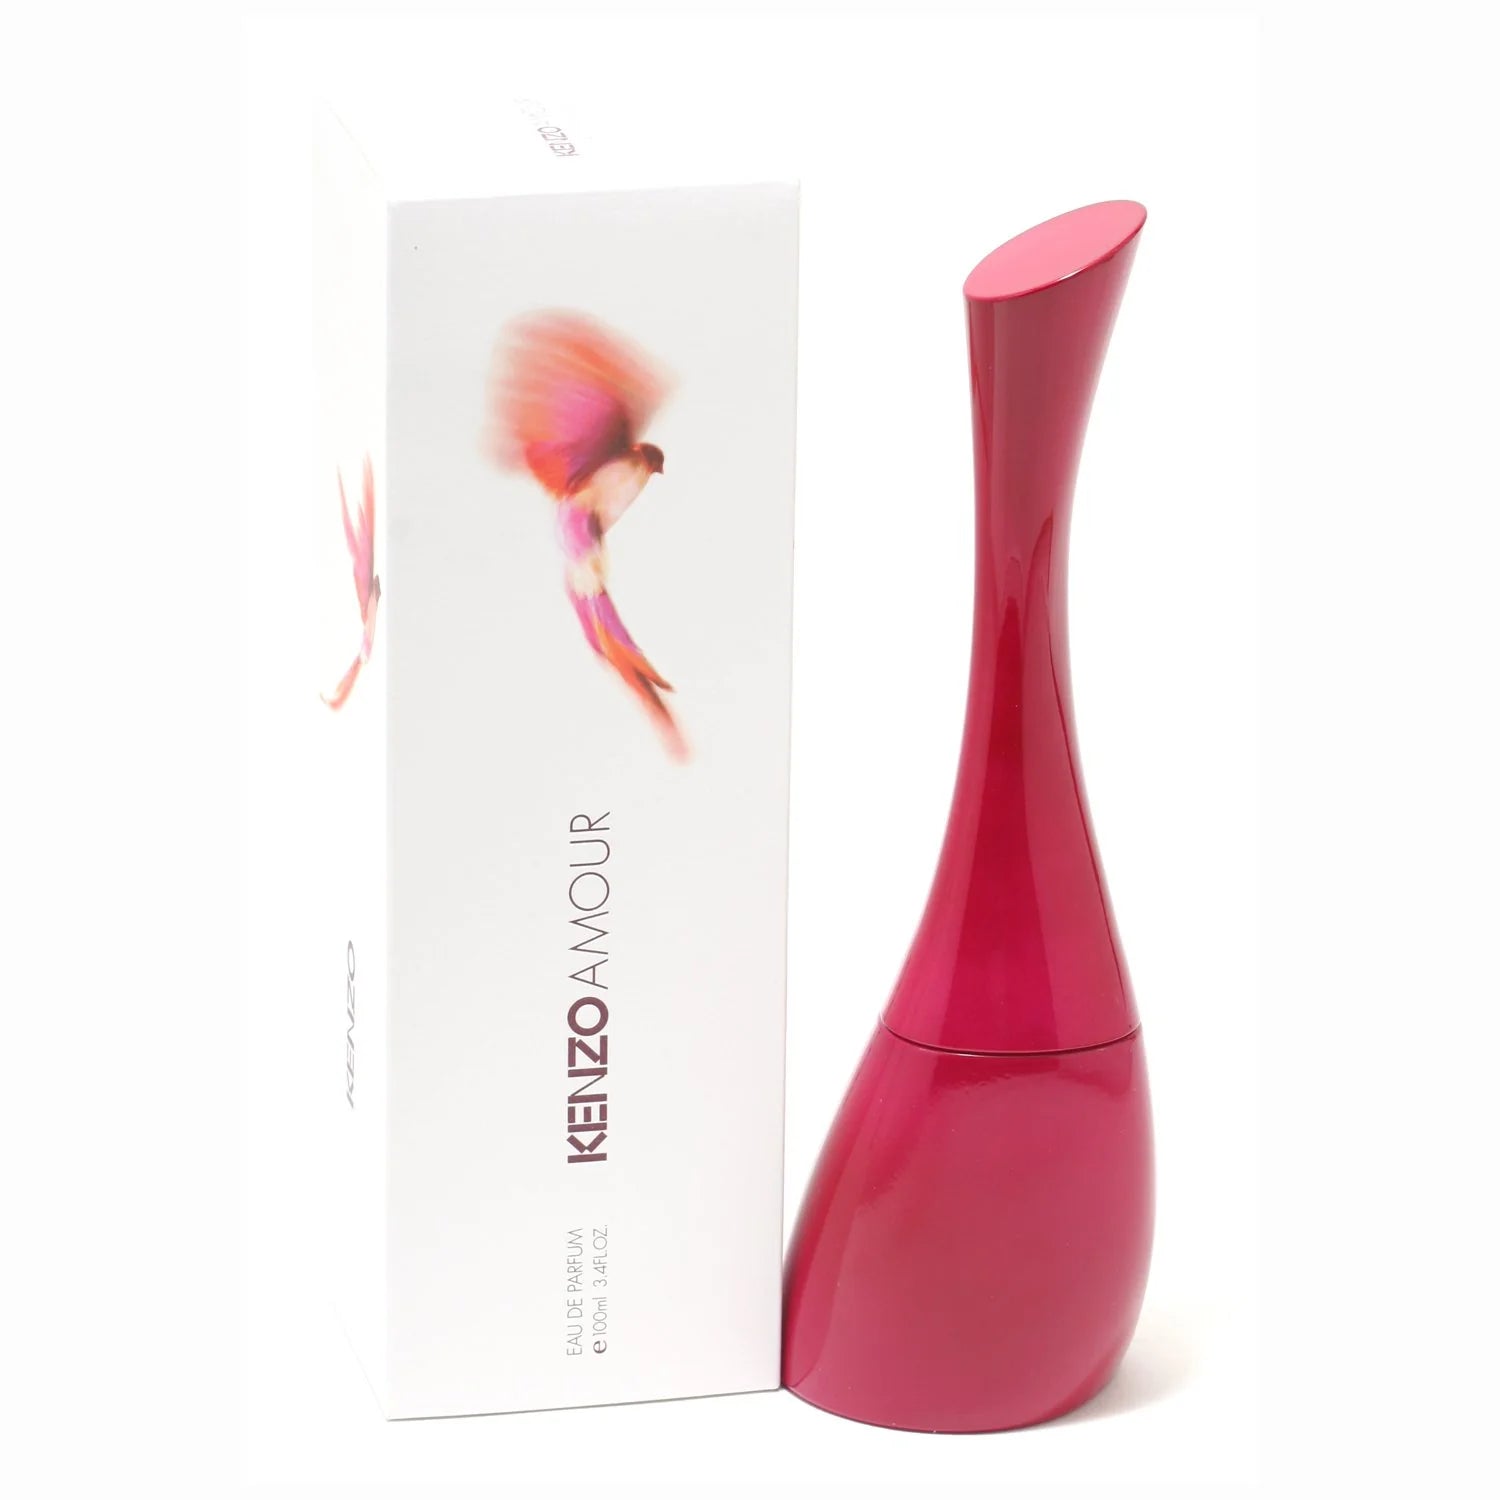 Kenzo Amour by Kenzo 100 ml Eau De Perfume Spray for Women